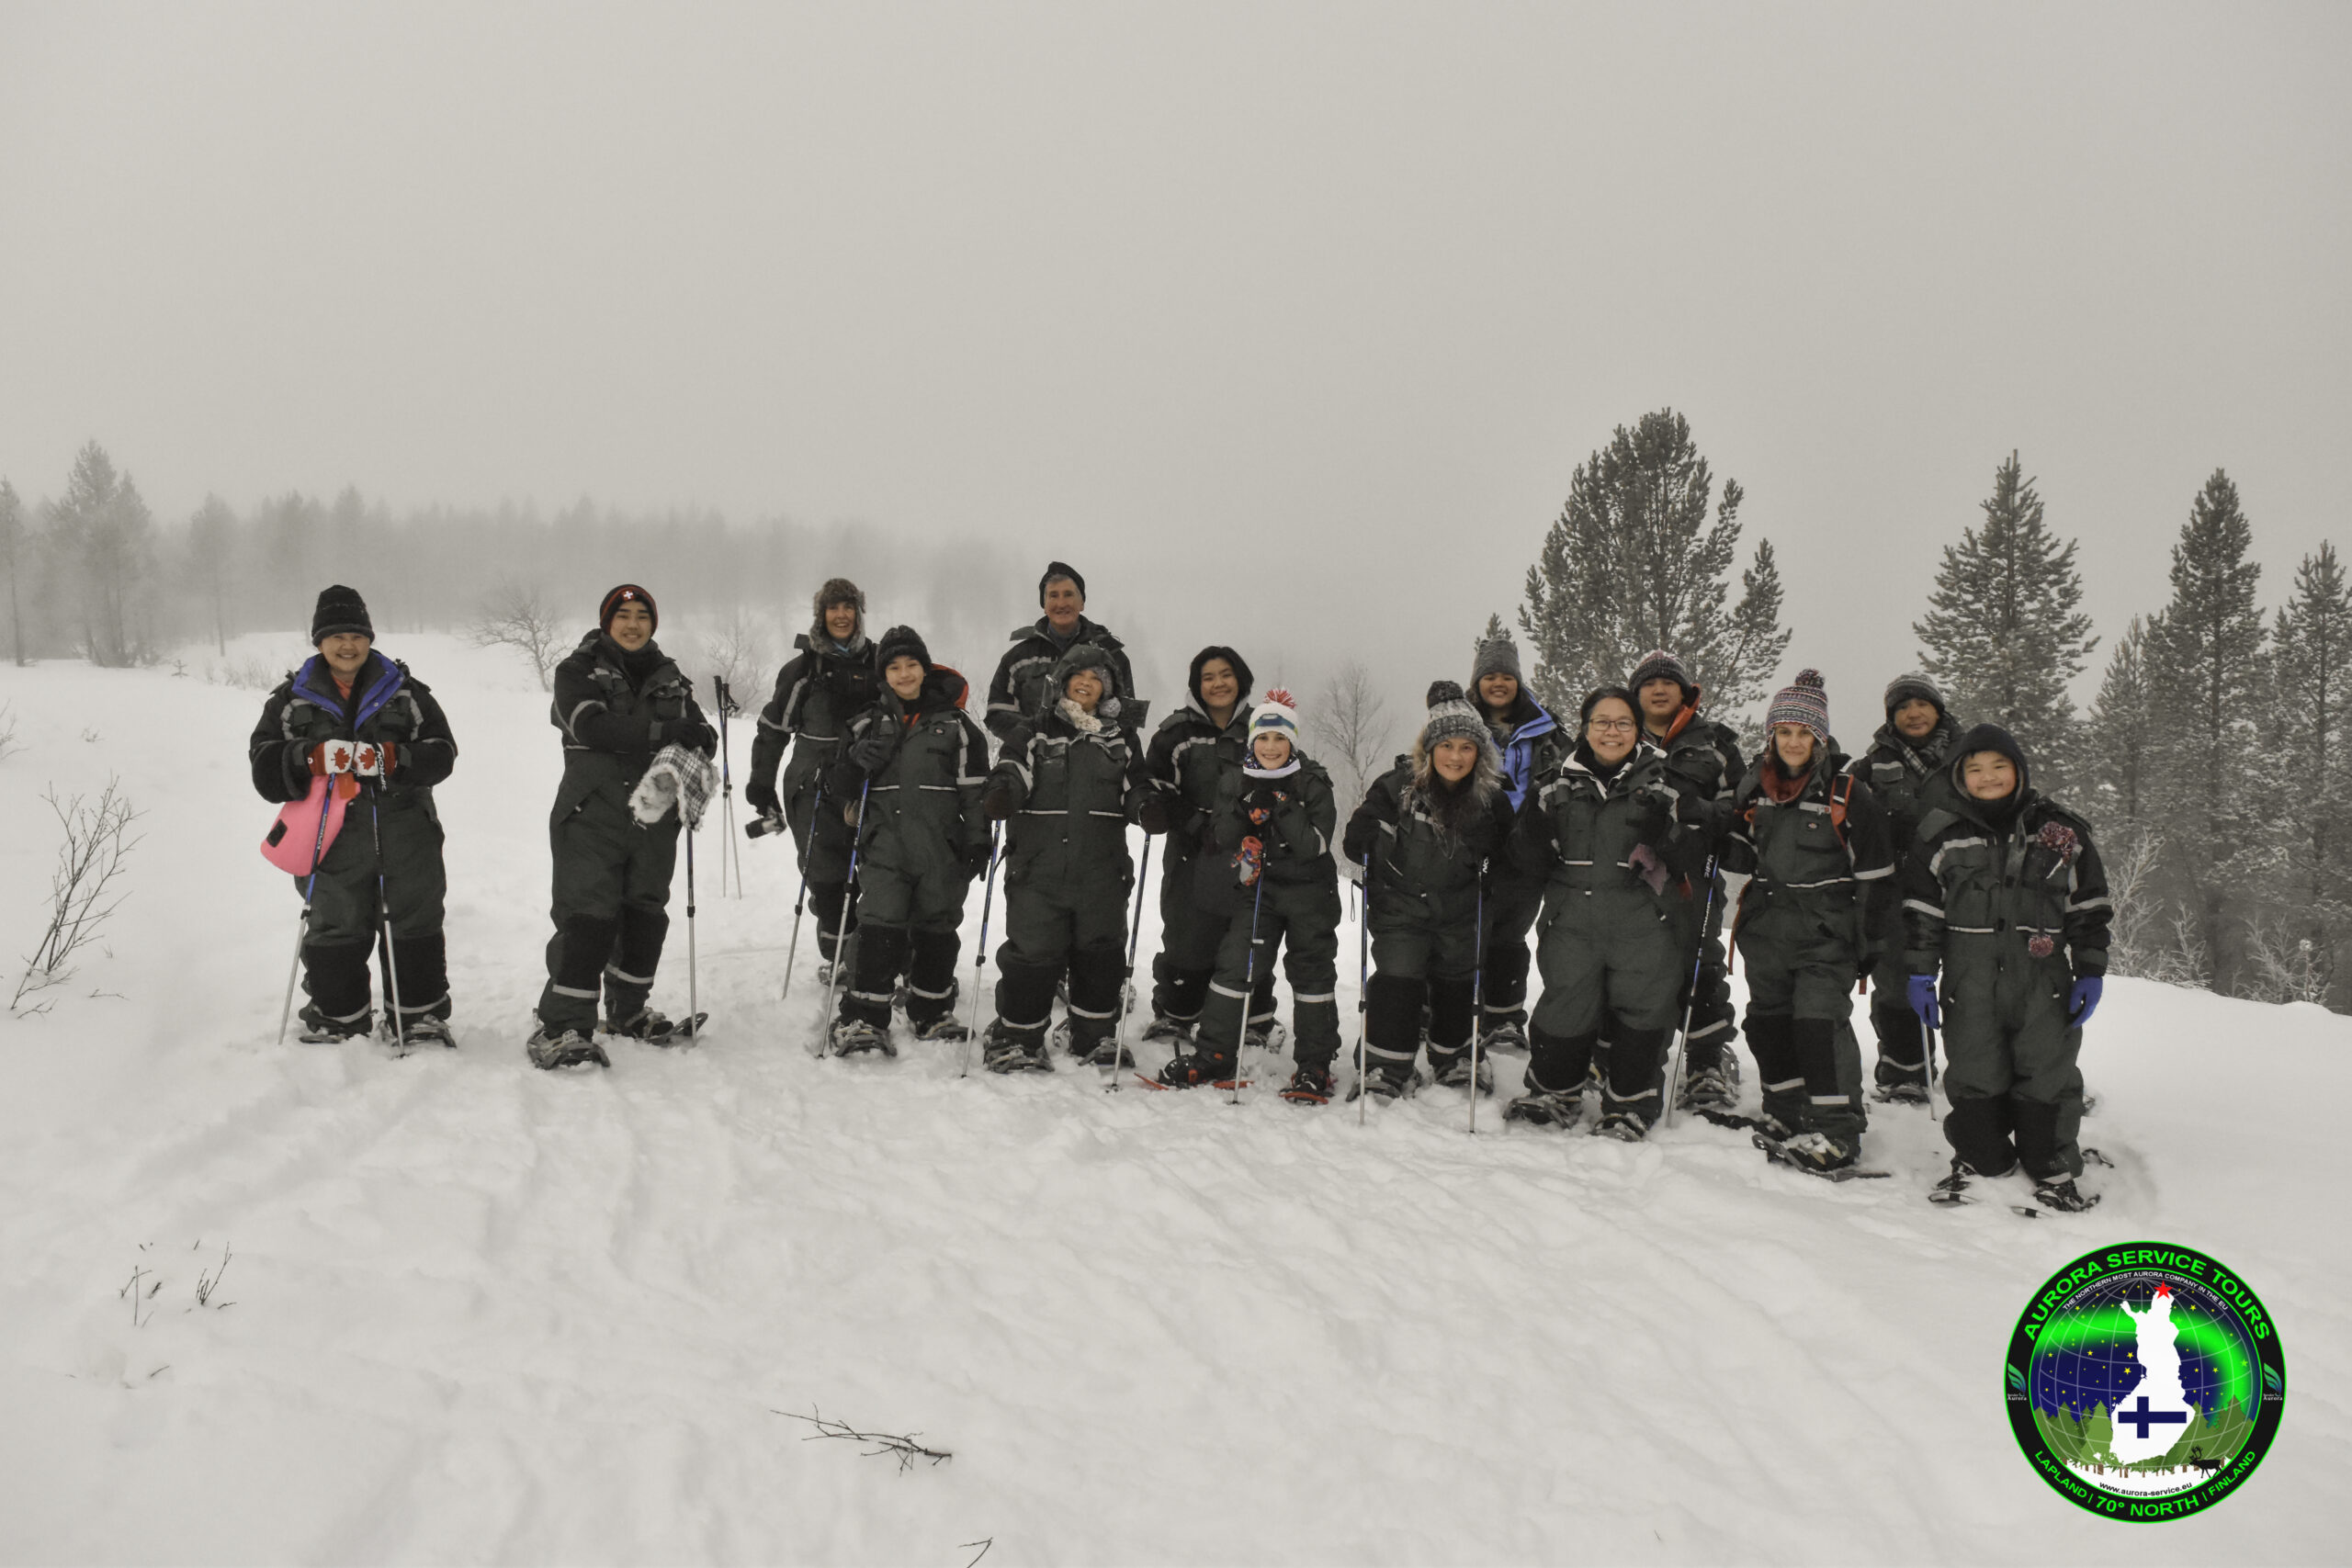 Snowshoe walk activity in Lapland, Finland